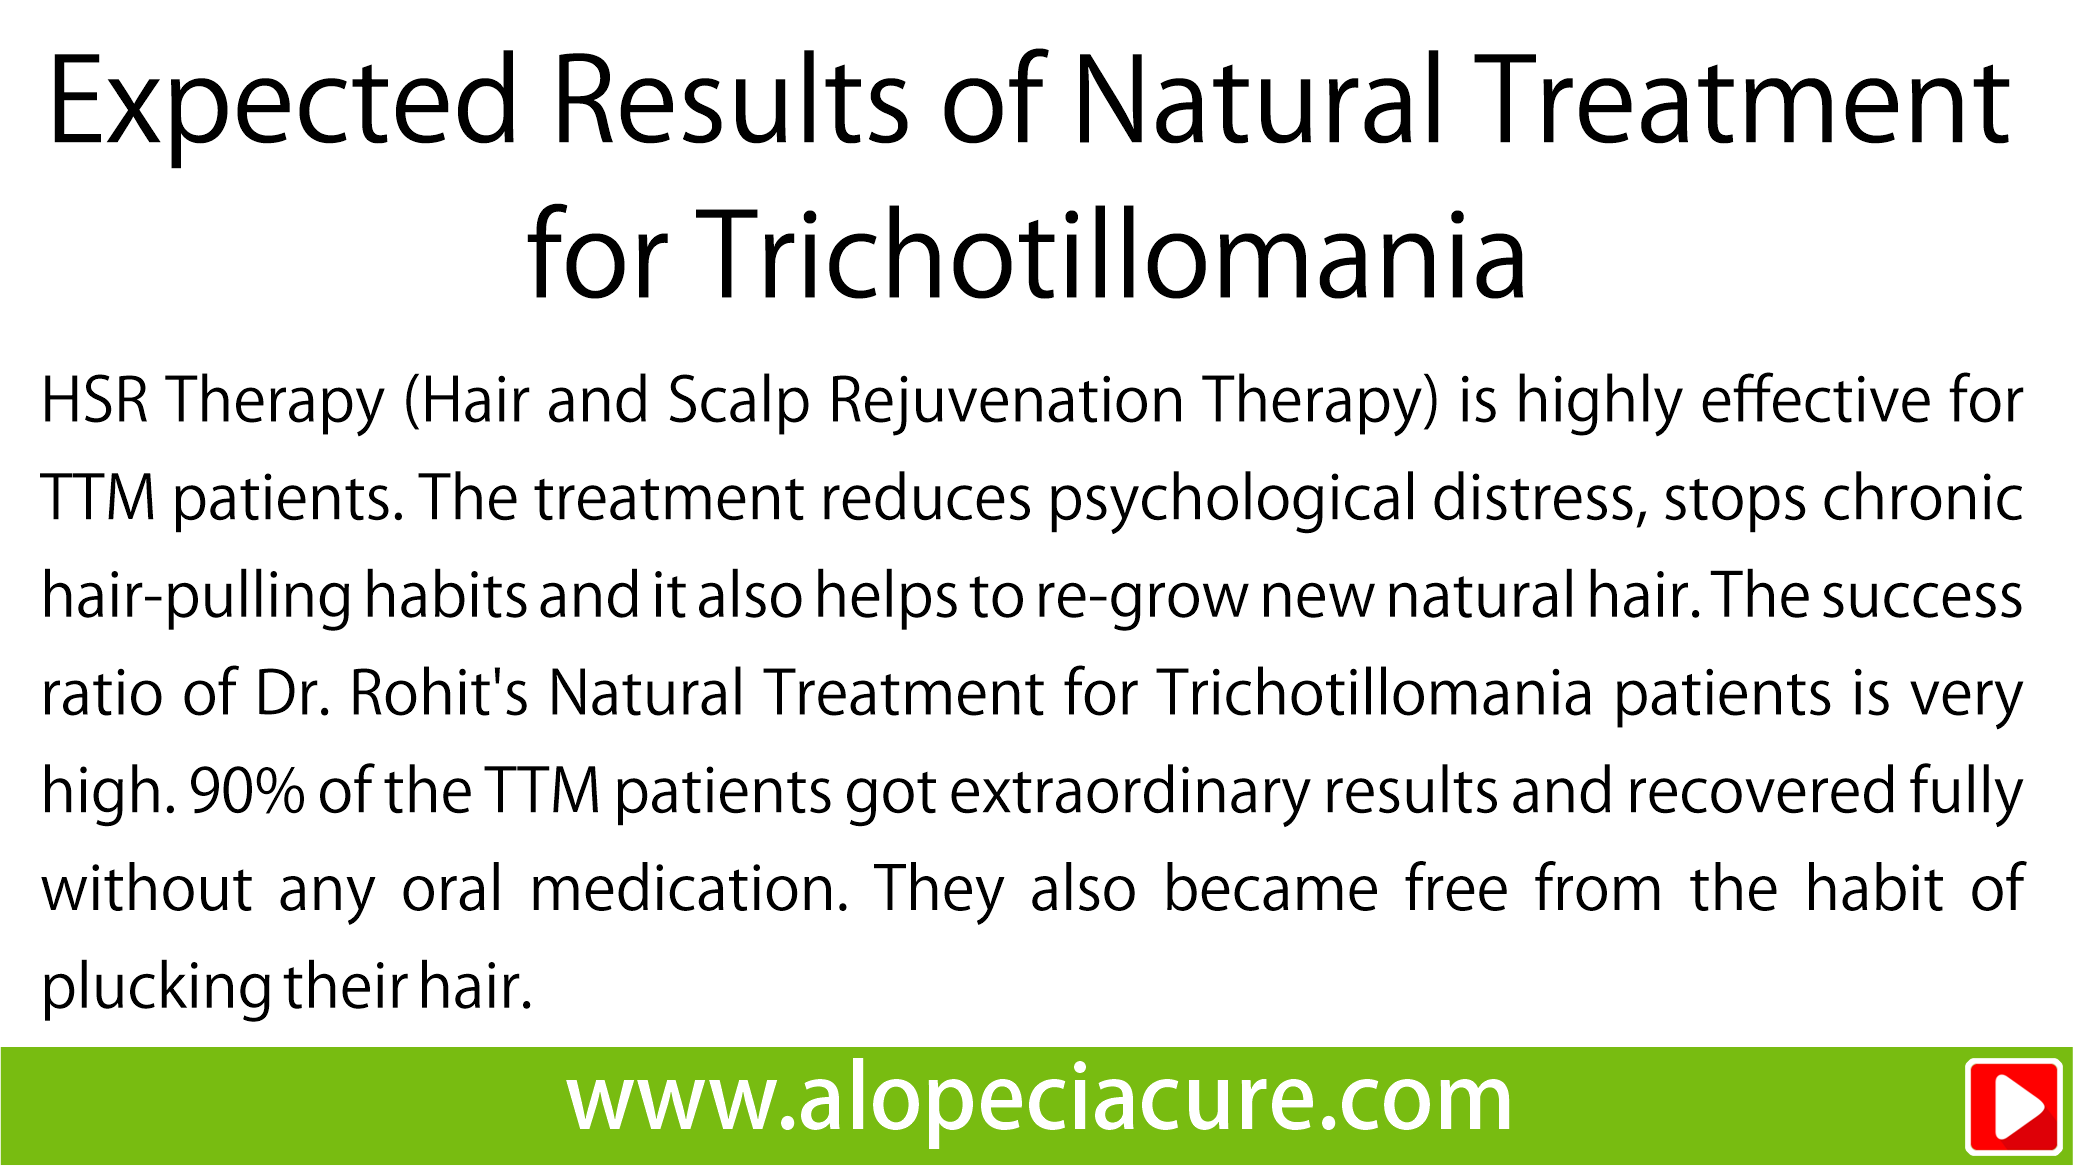 trichotillomania treatment